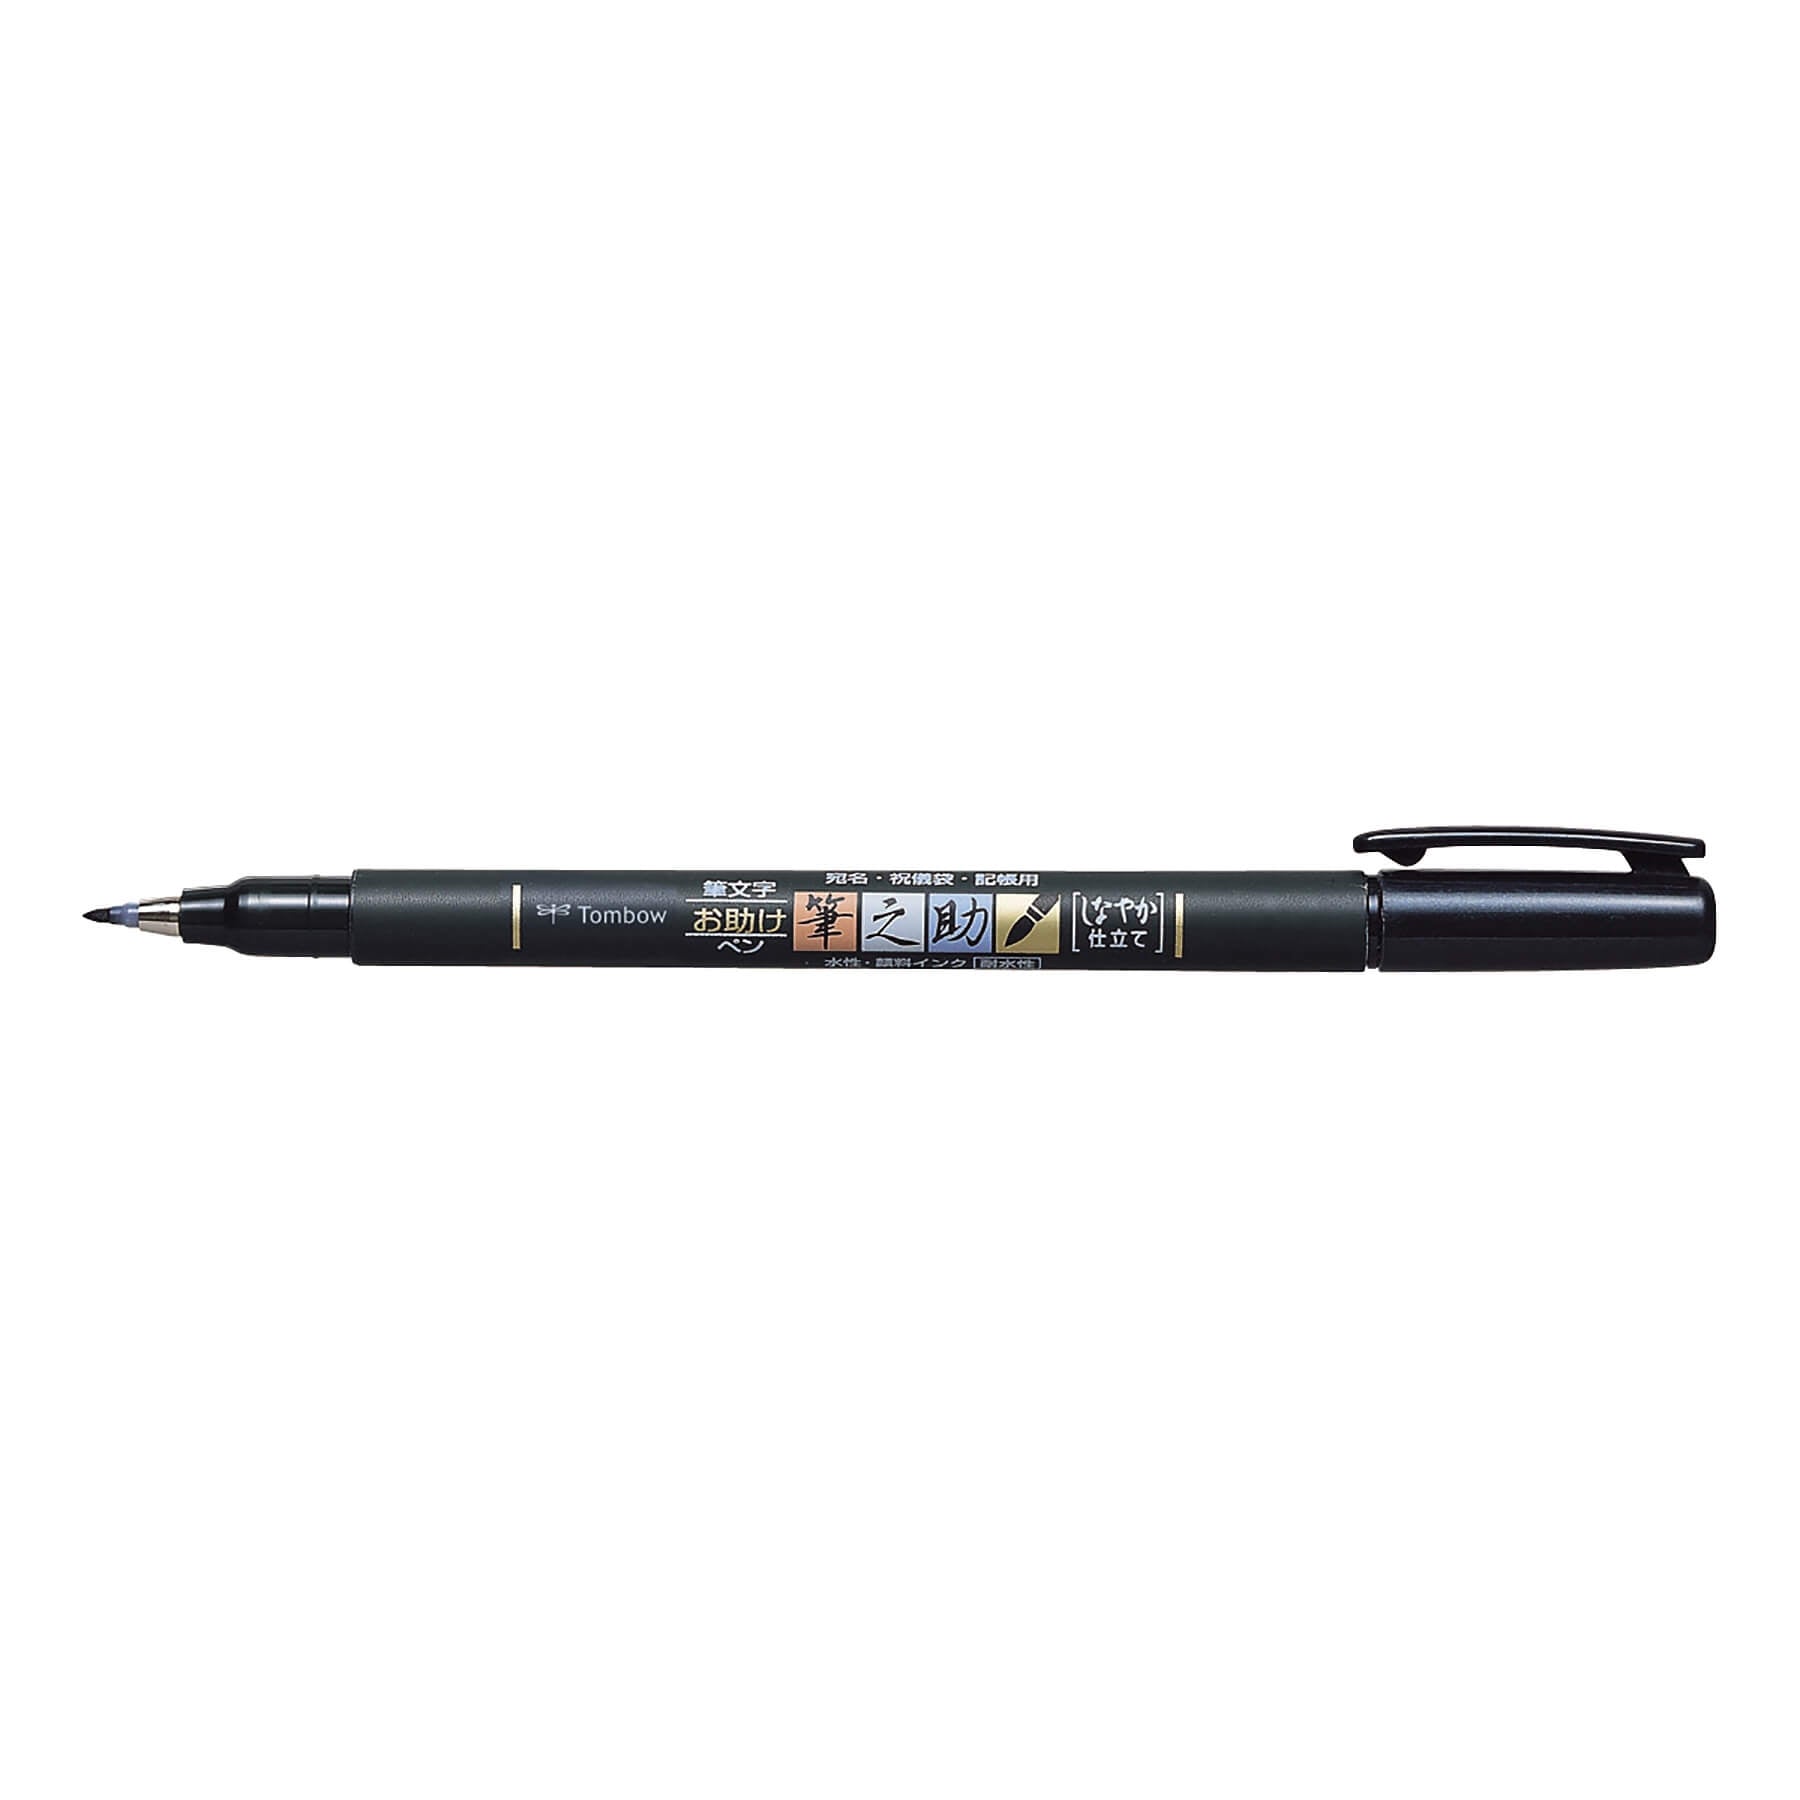 Tombow Fudenosuke Soft Brush Pen Black with open tip / without cap